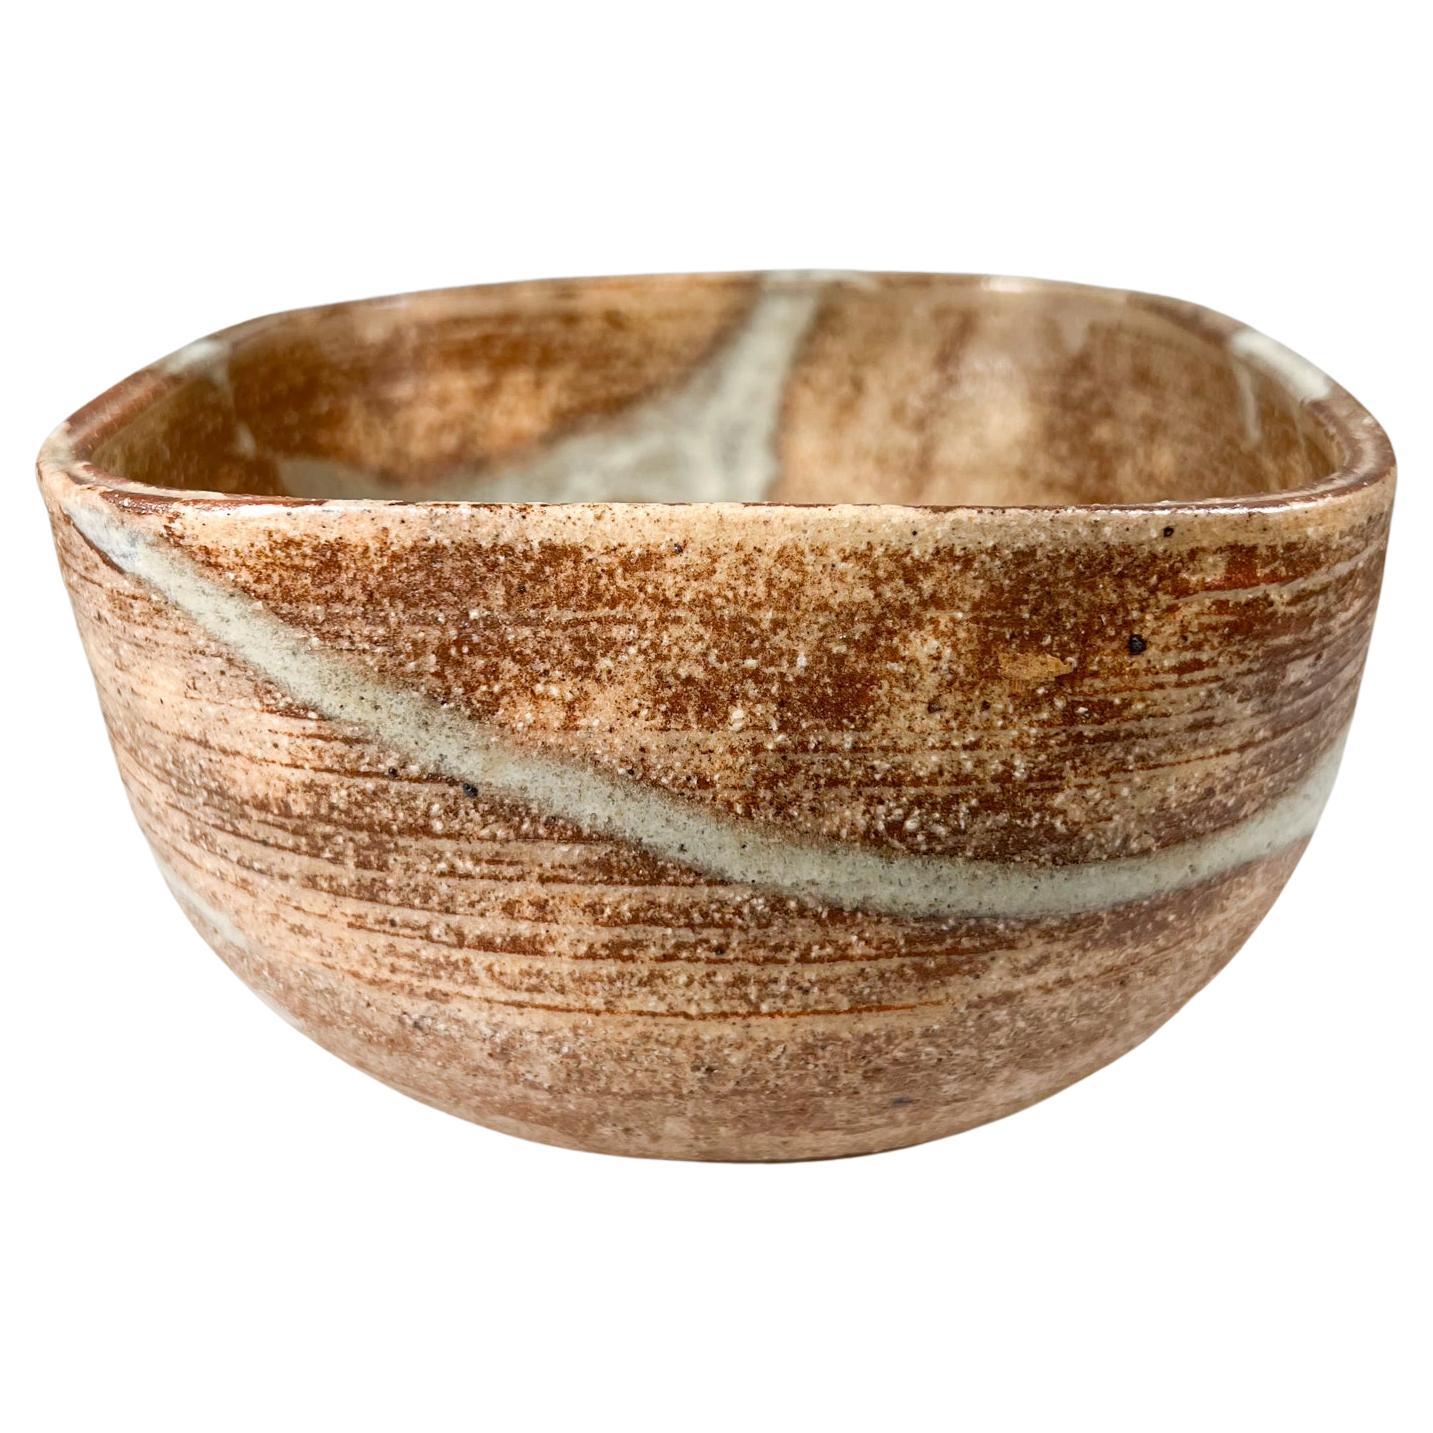 Vintage Japanese Artisan Modern Art Pottery Bowl Signed